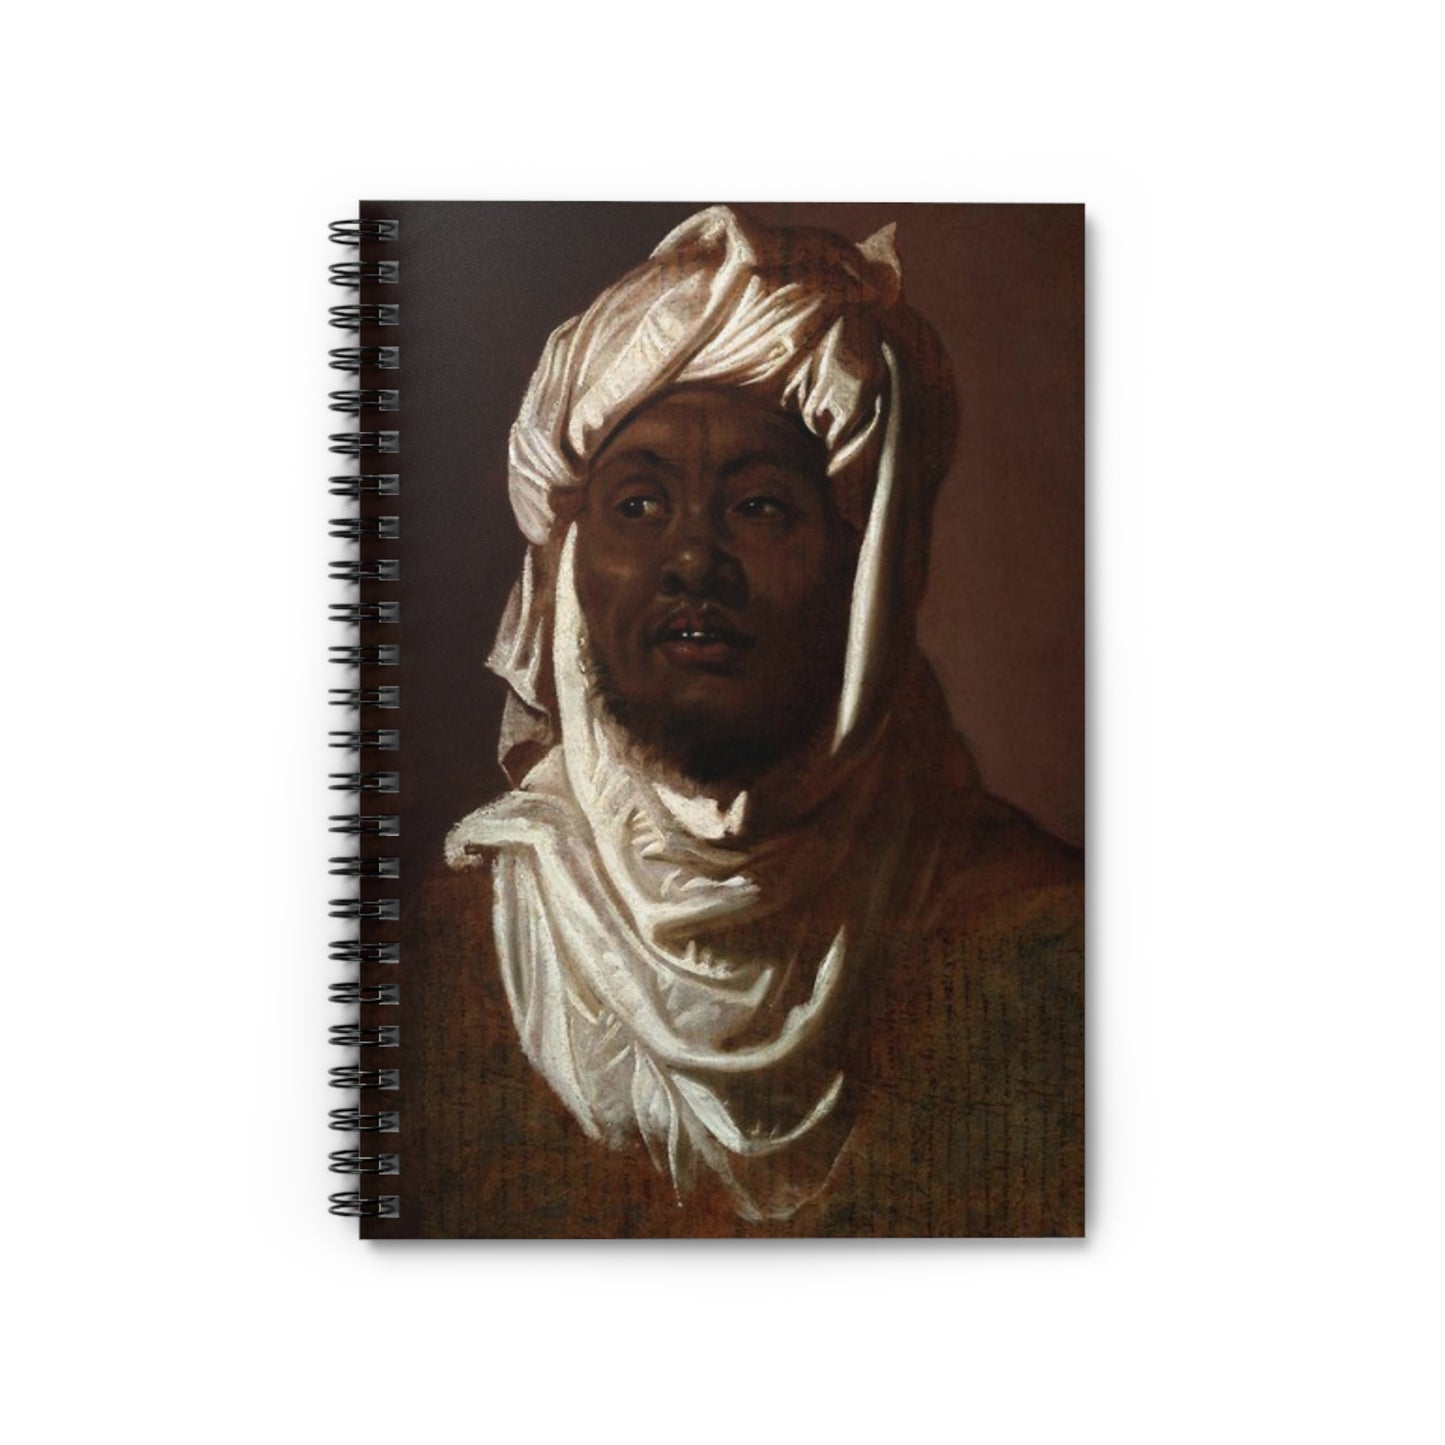 Portrait Of a Moorish Man Wearing A Turban-Spiral Notebook Ruled Line